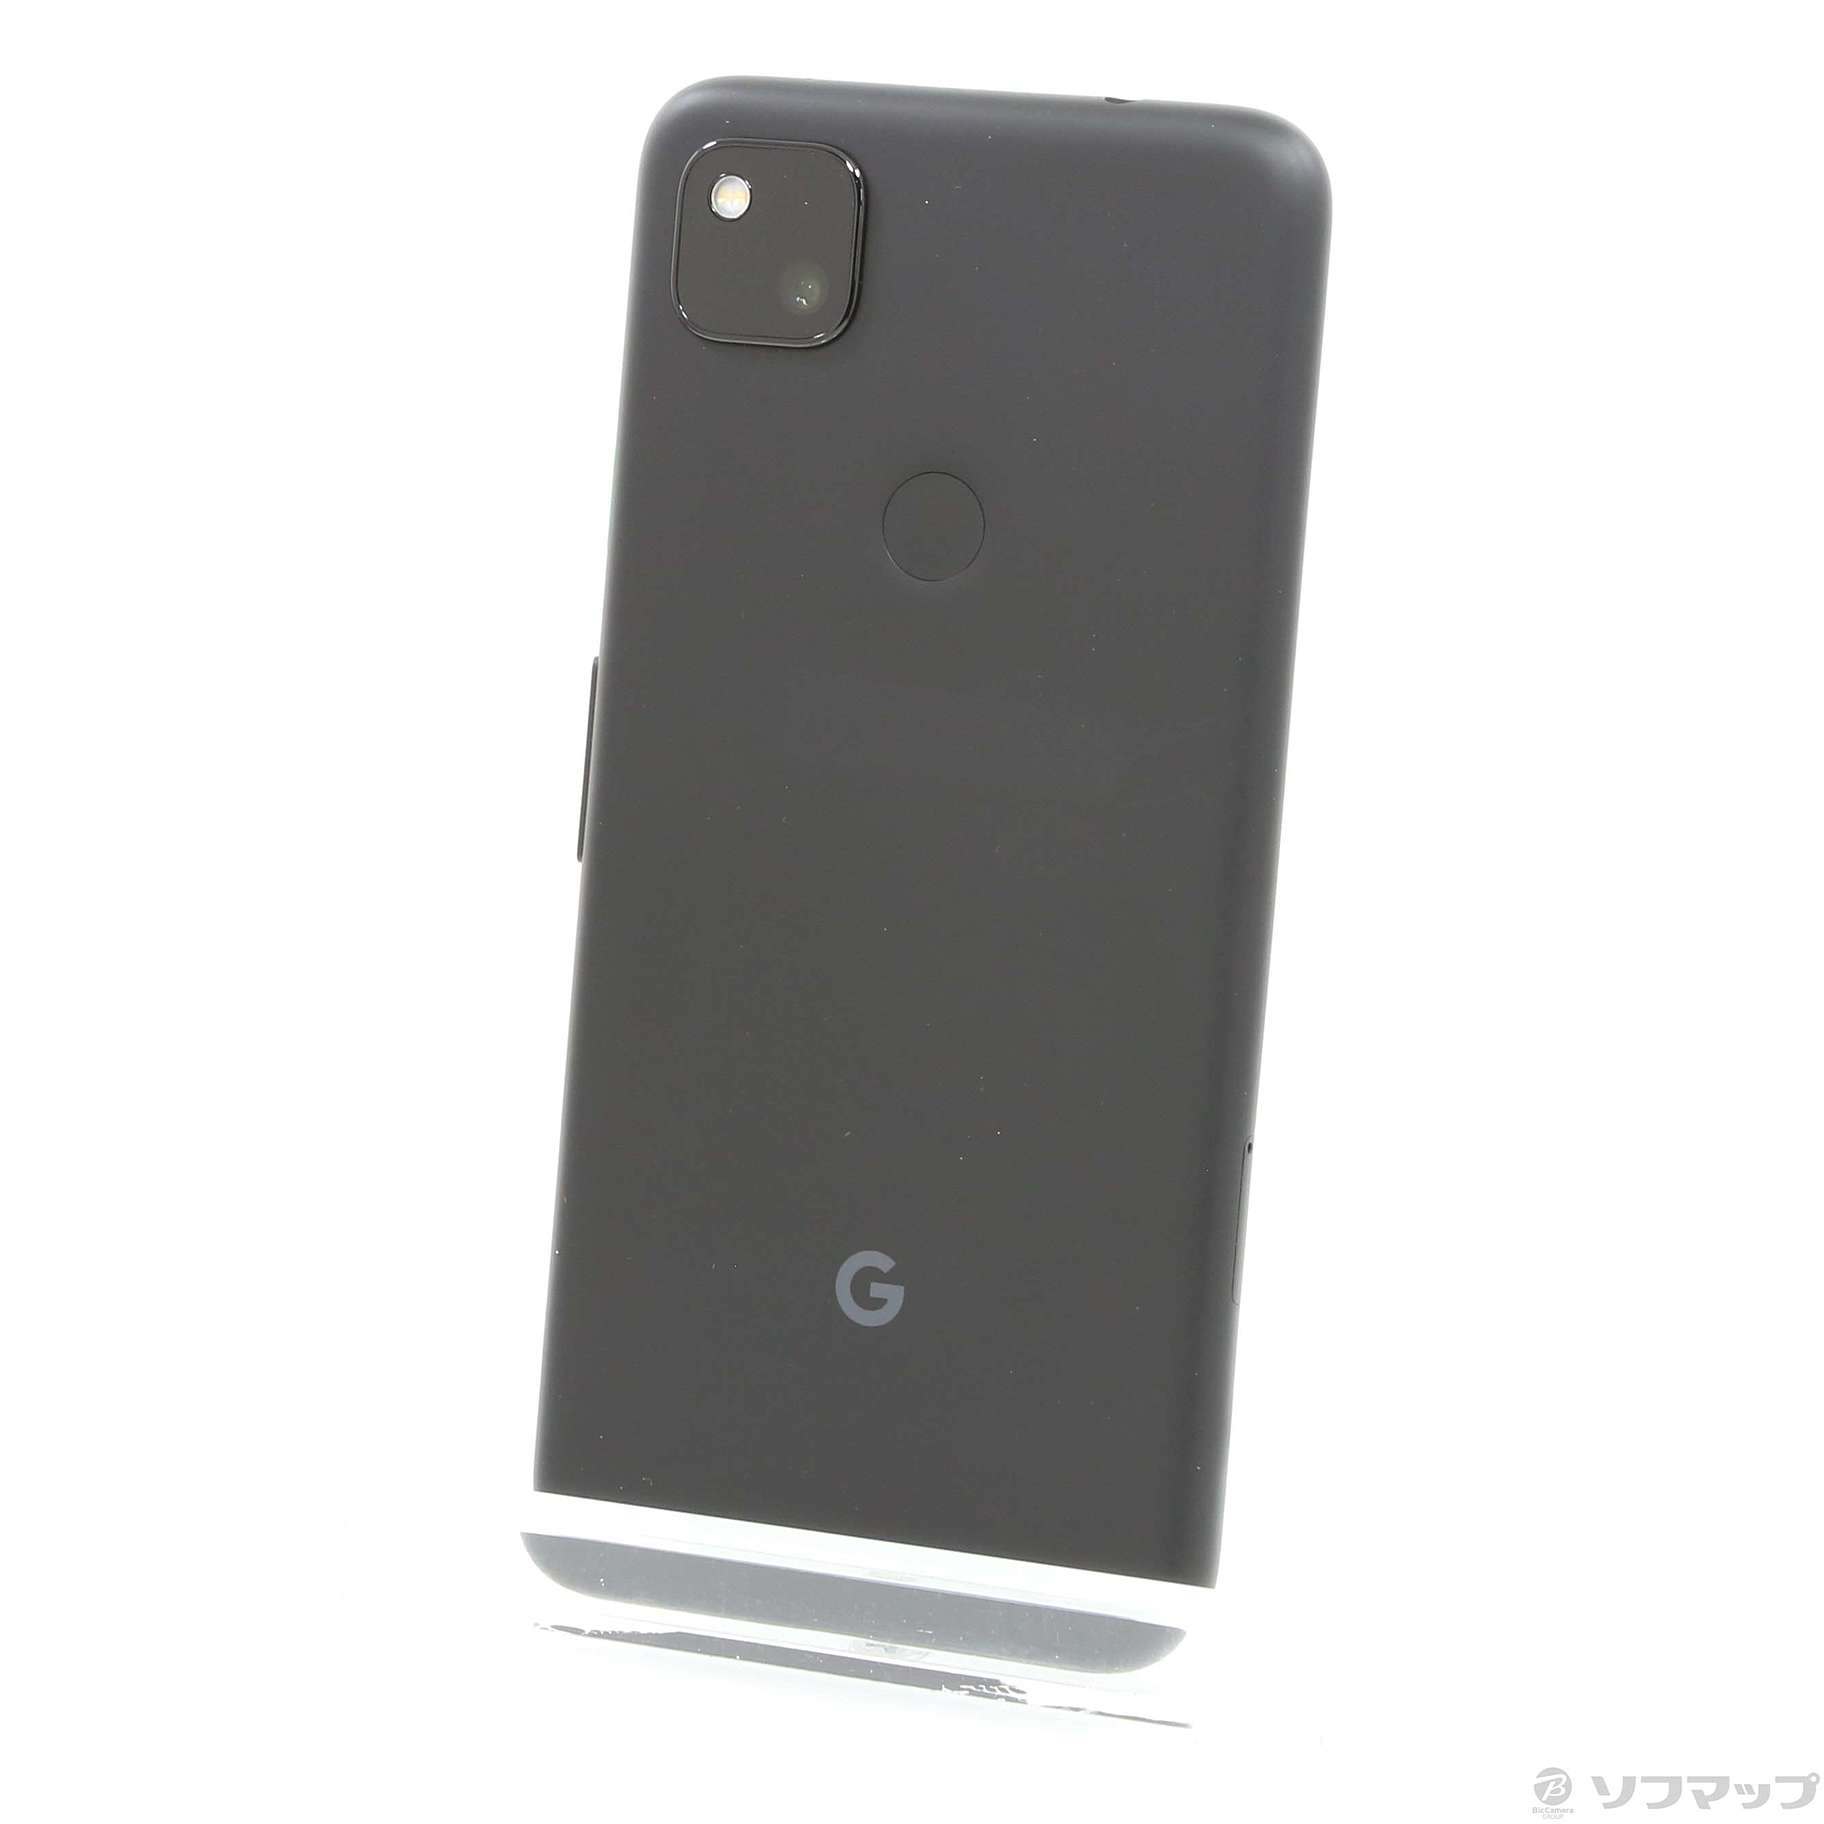 Google Pixel 4a (5G) ジャストブラック 128 GB